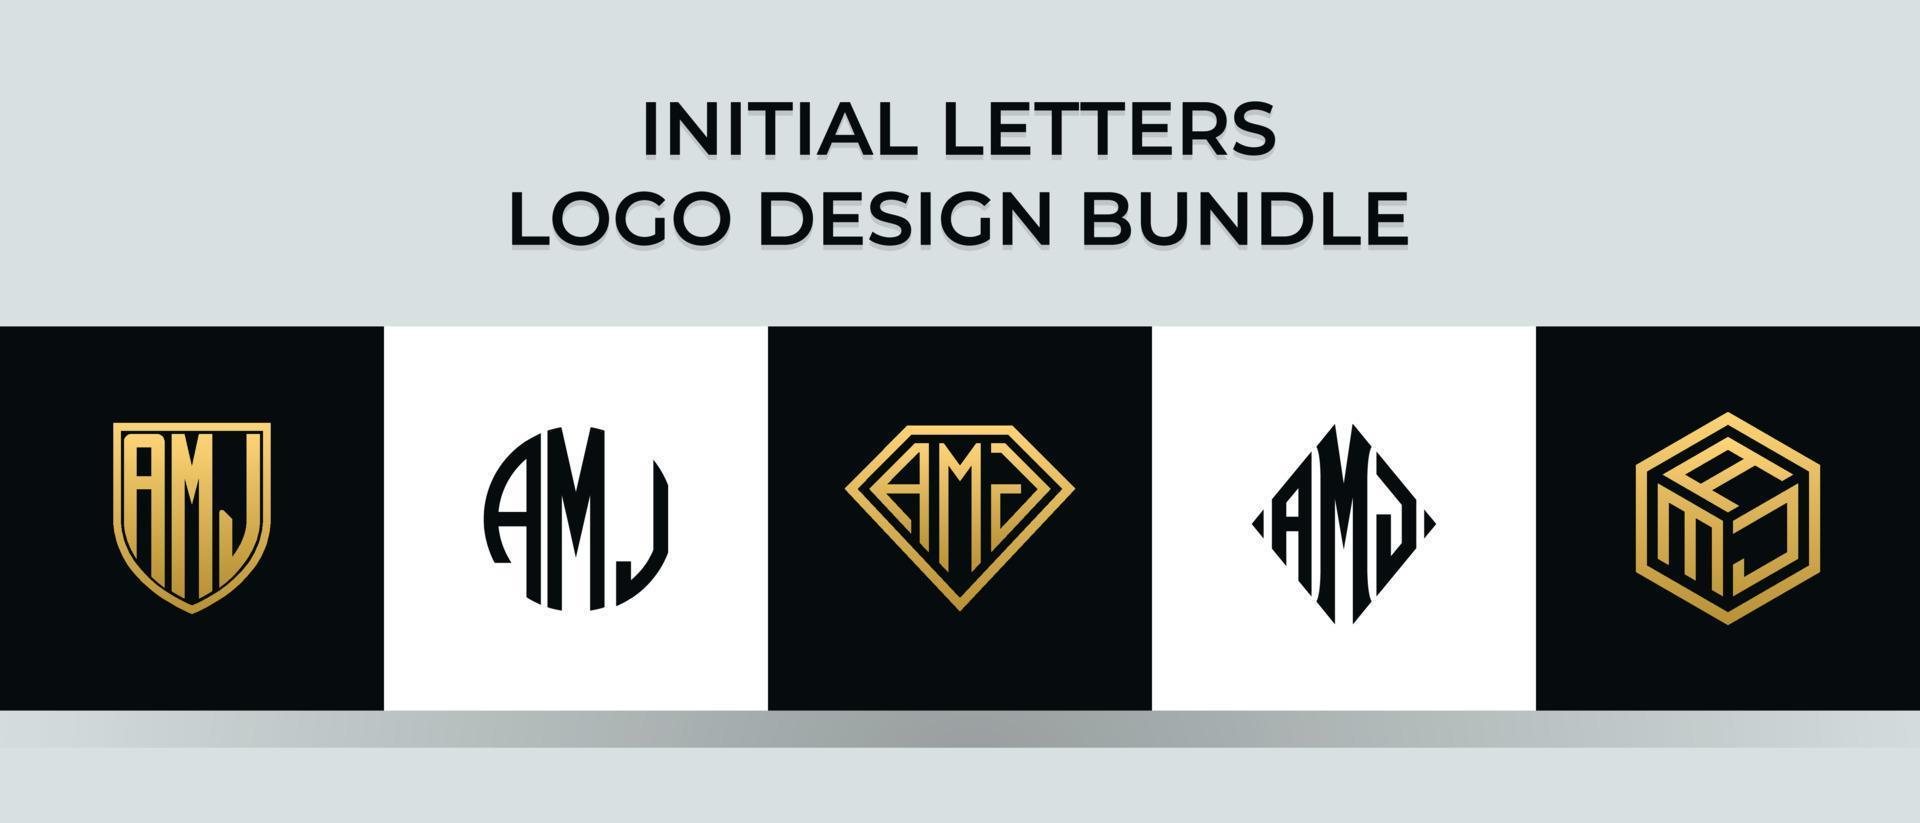 Initial letters AMJ logo designs Bundle vector